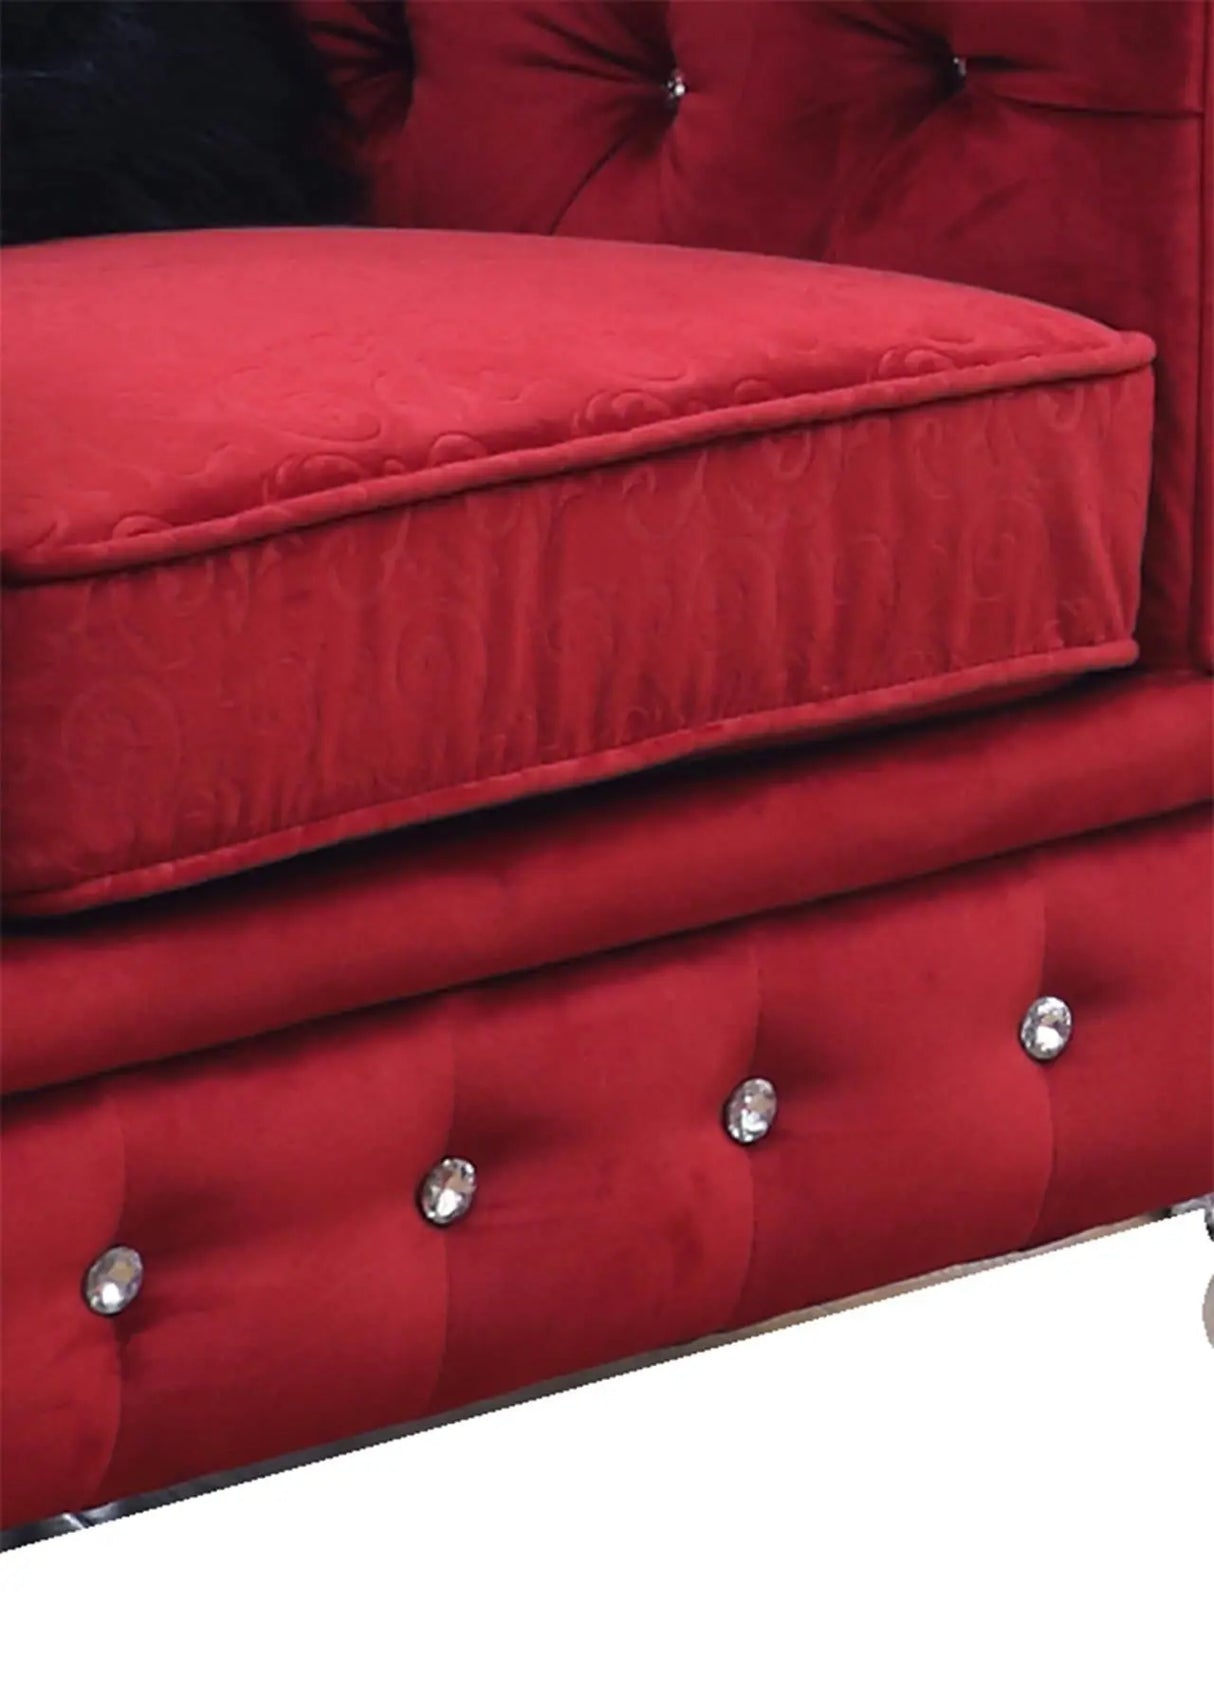 Sahara Modern Style Red Chair with Acrylic legs - Home Elegance USA